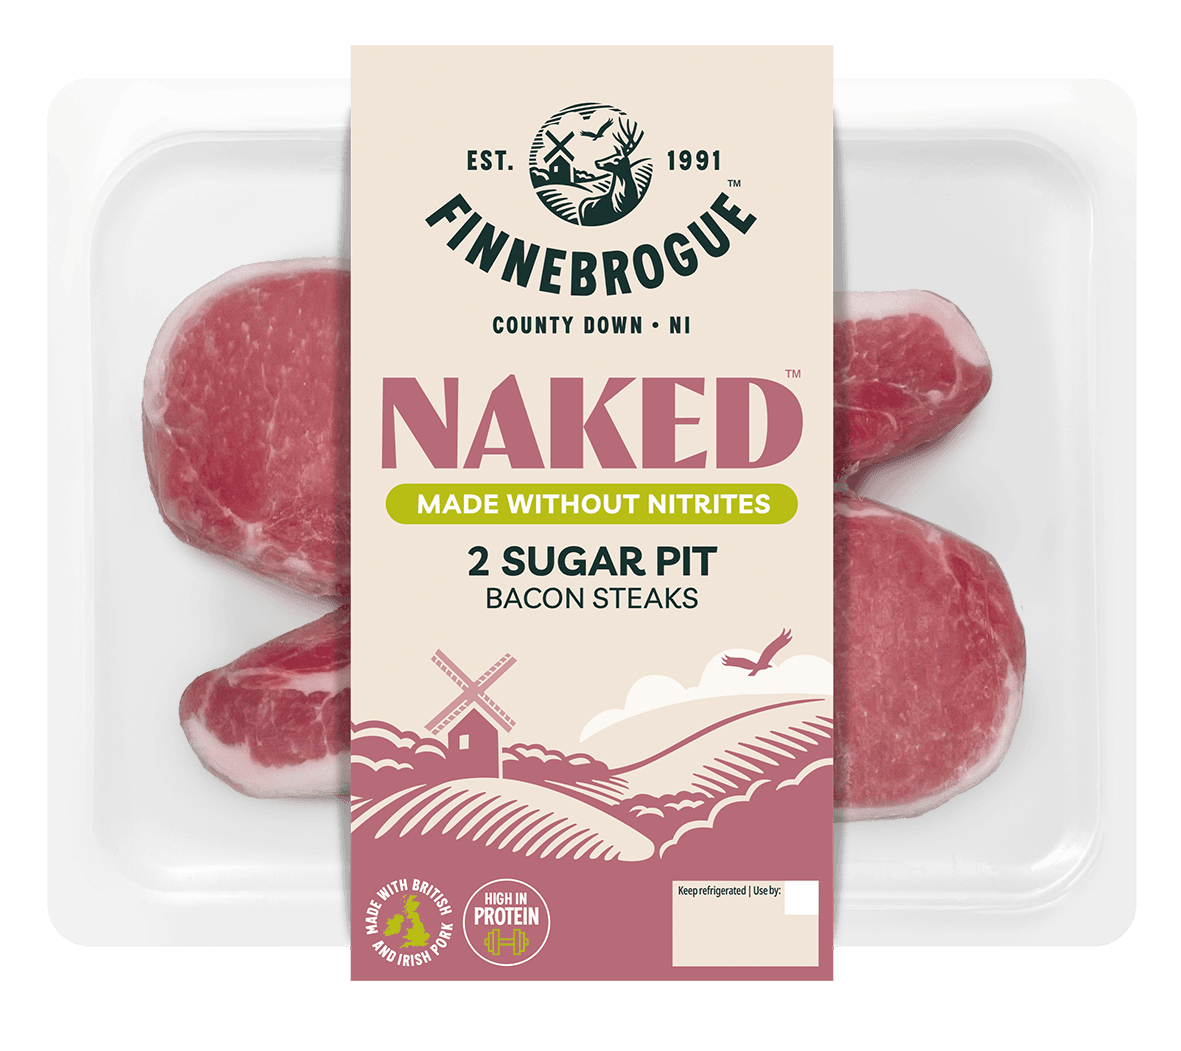 Finnebrogue Naked Sugar-Pit Bacon Steaks.